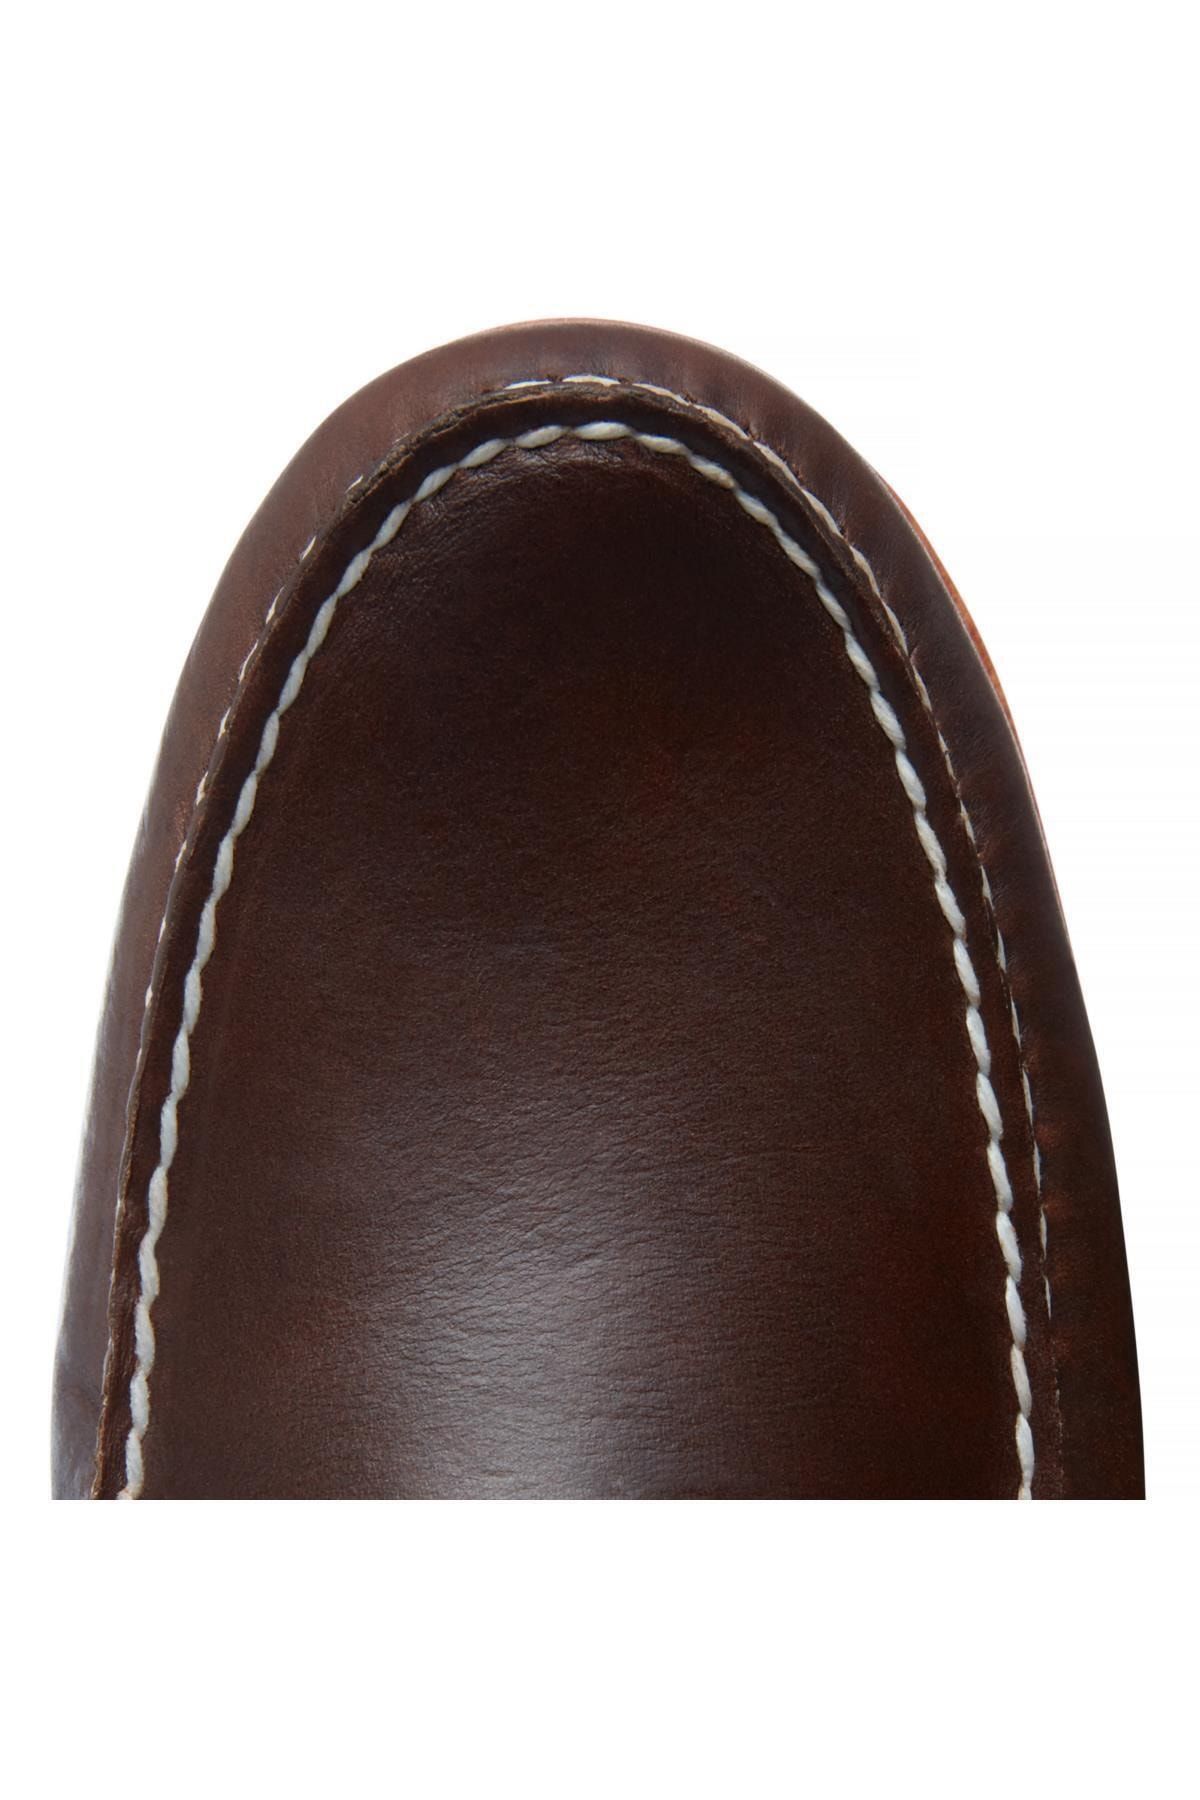 Timberland کفش مردانه کلاسیک Authentics 3 Eye Brown